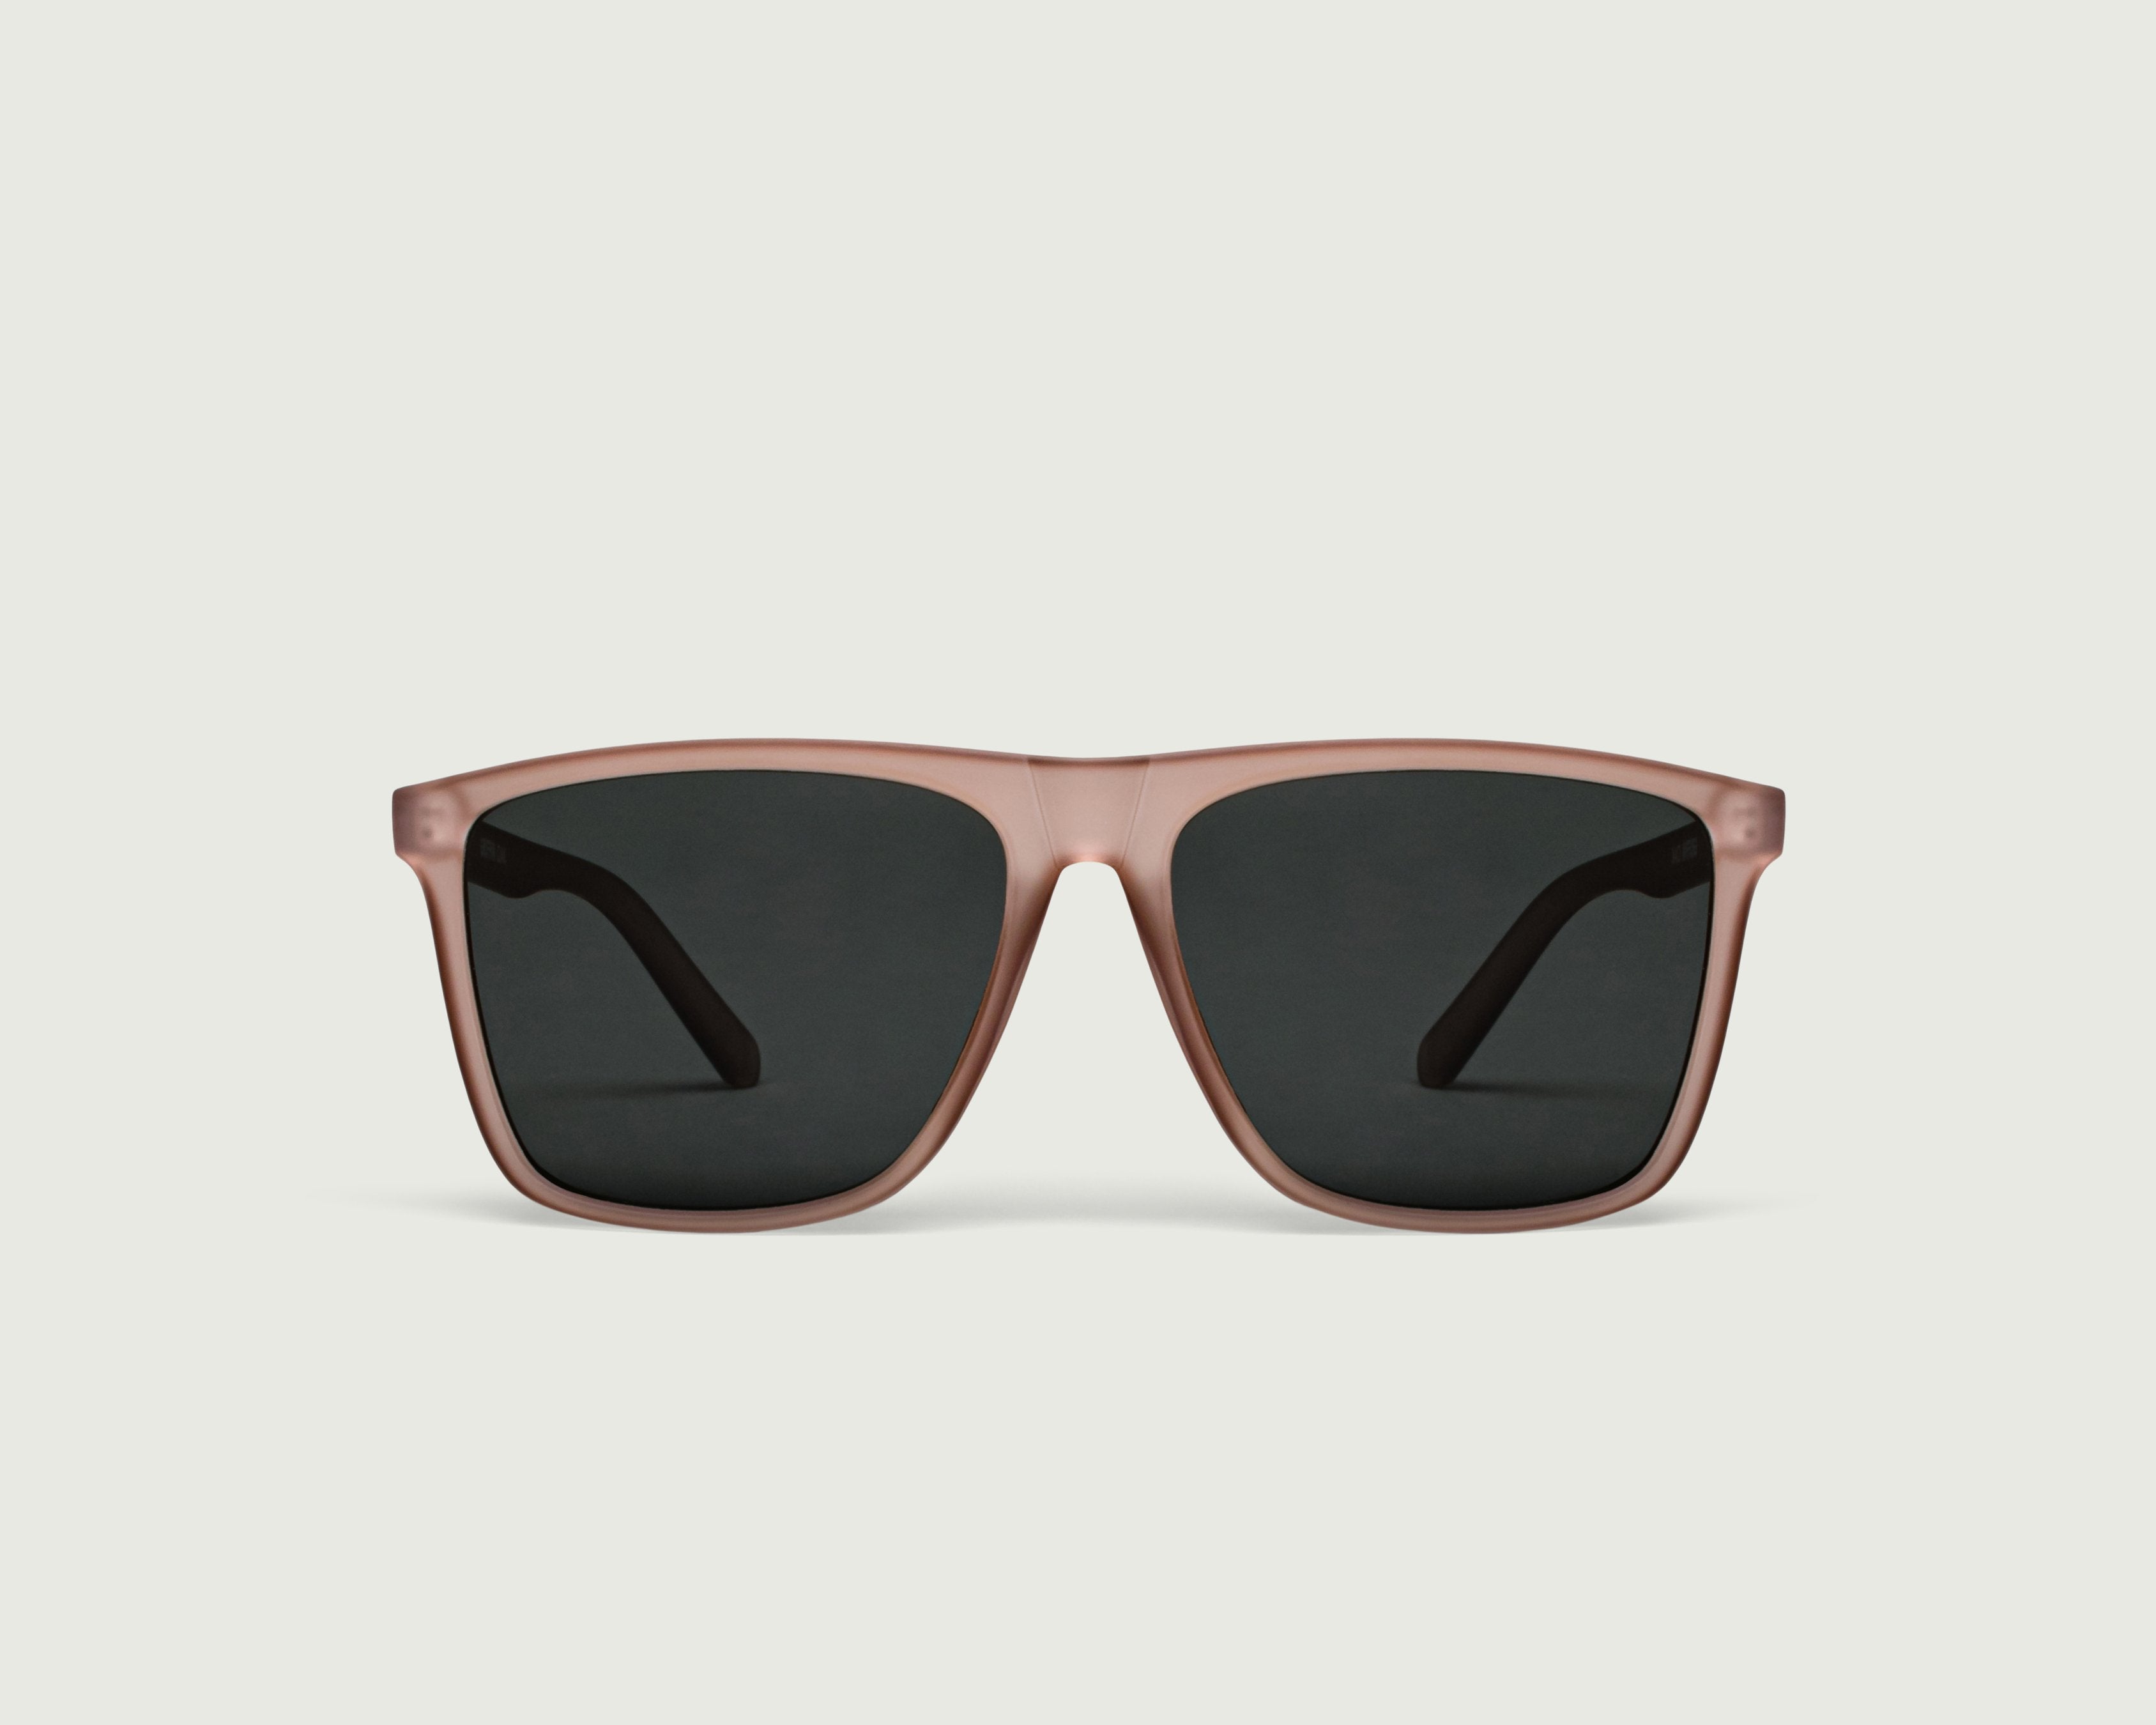 Oak::Griffin Sunglasses square brown plastic front